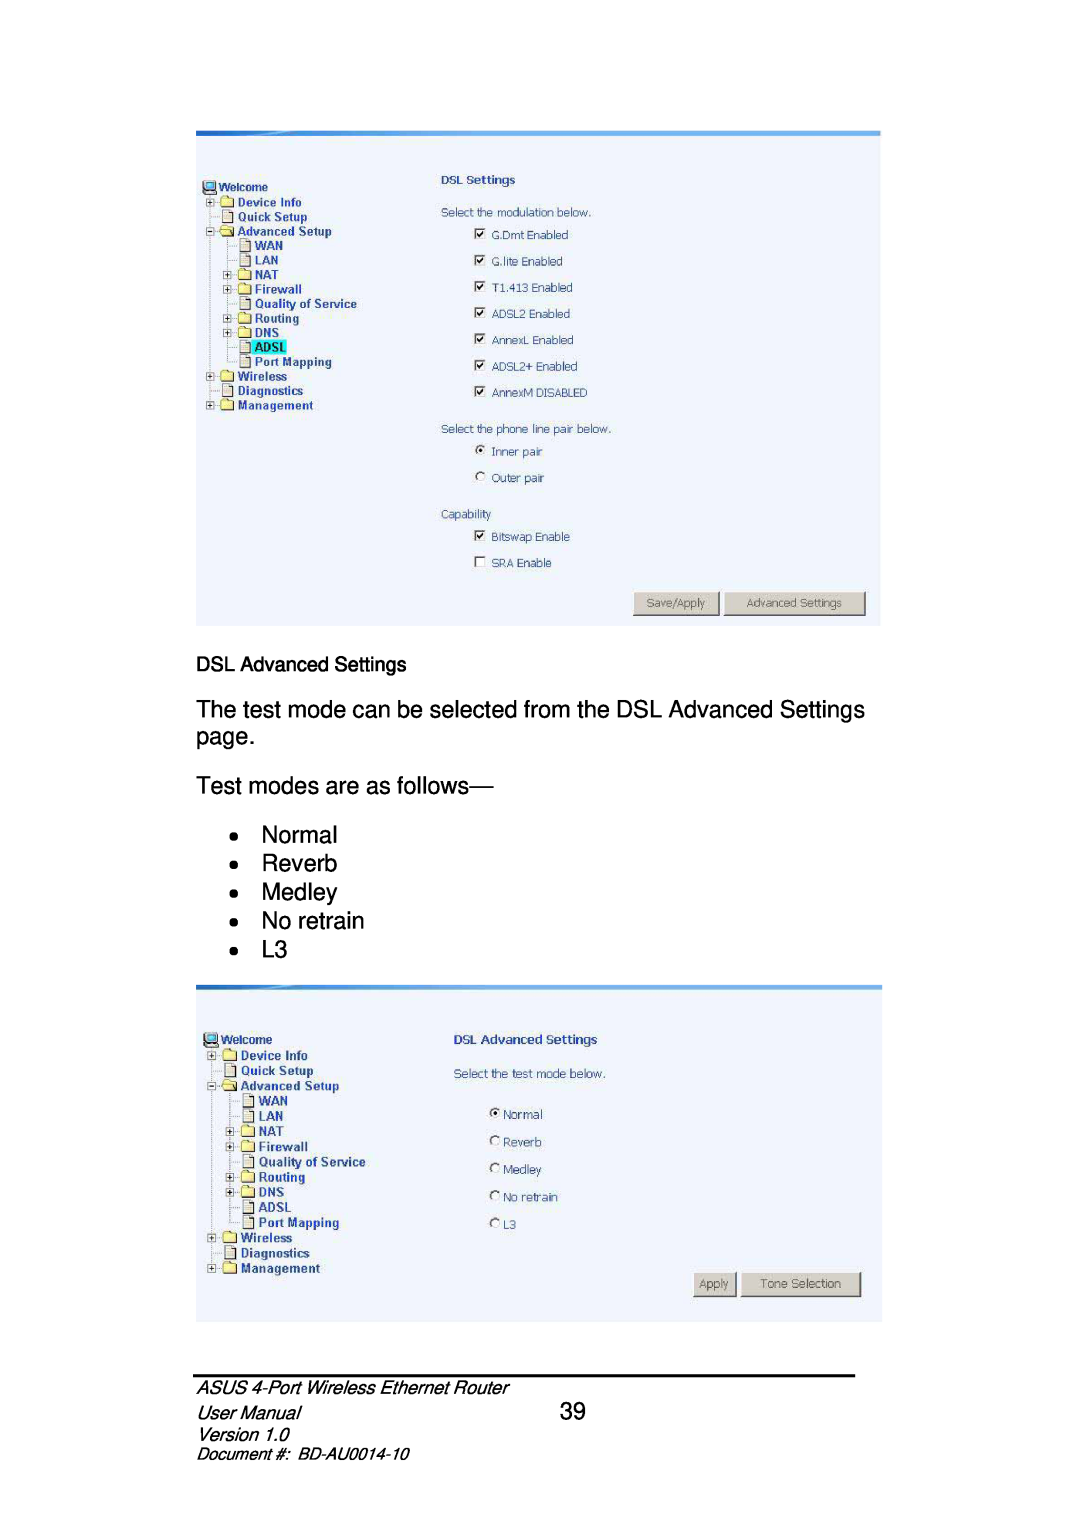 Asus BD-AU0014-10 user manual DSL Advanced Settings, ASUS 4-Port Wireless Ethernet Router, User Manual, Version 